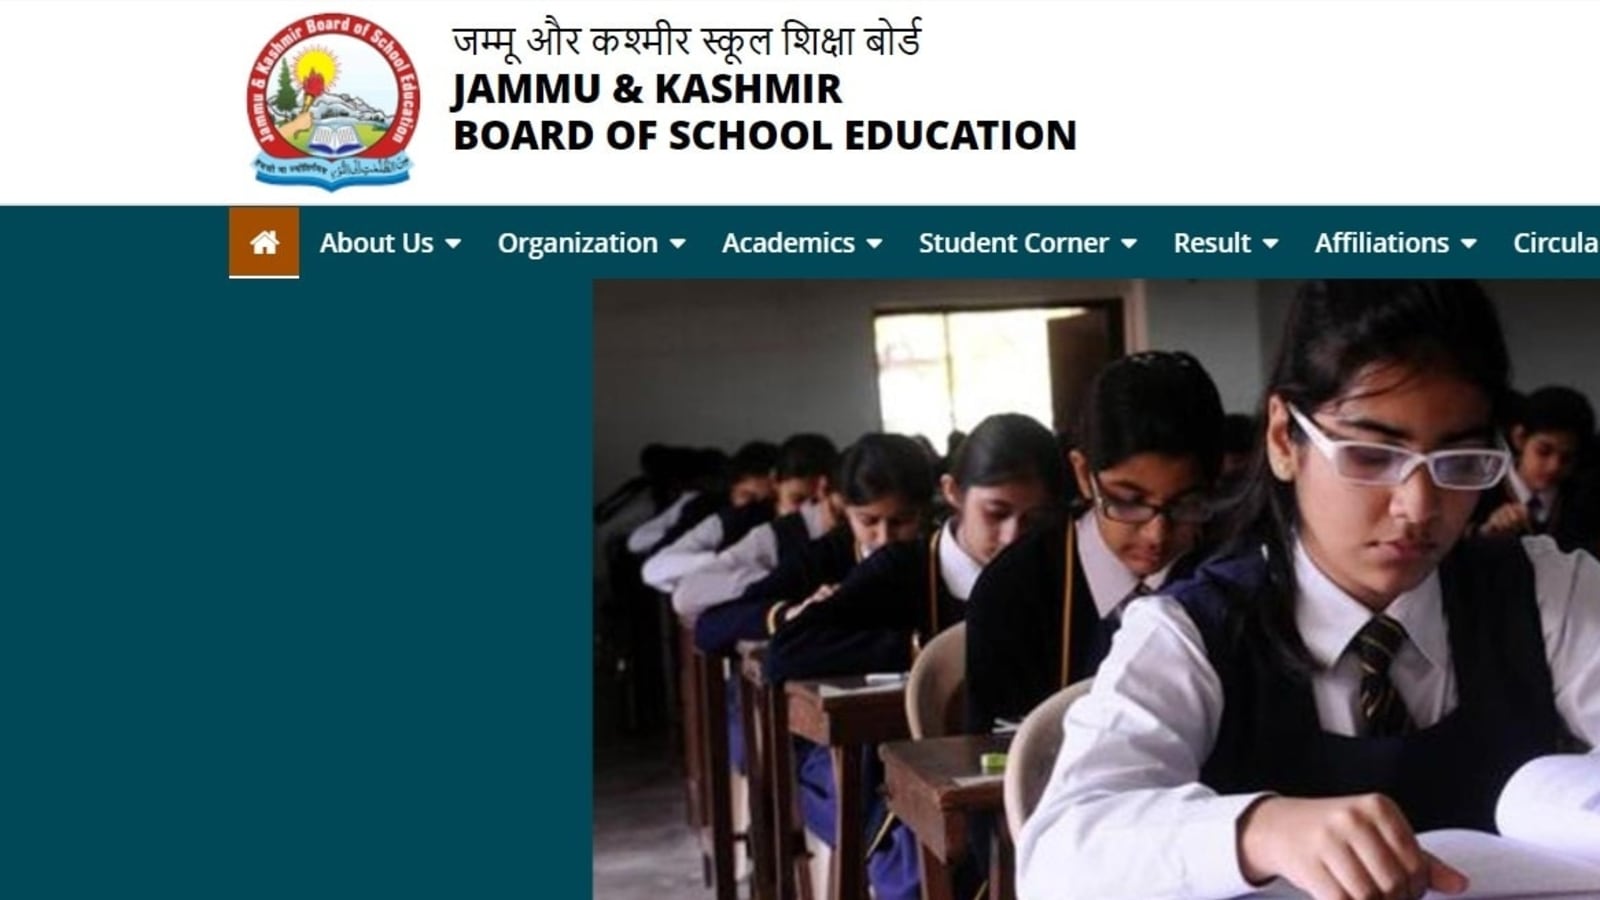 JKBOSE 12th result declared for Kashmir division, here's direct link to